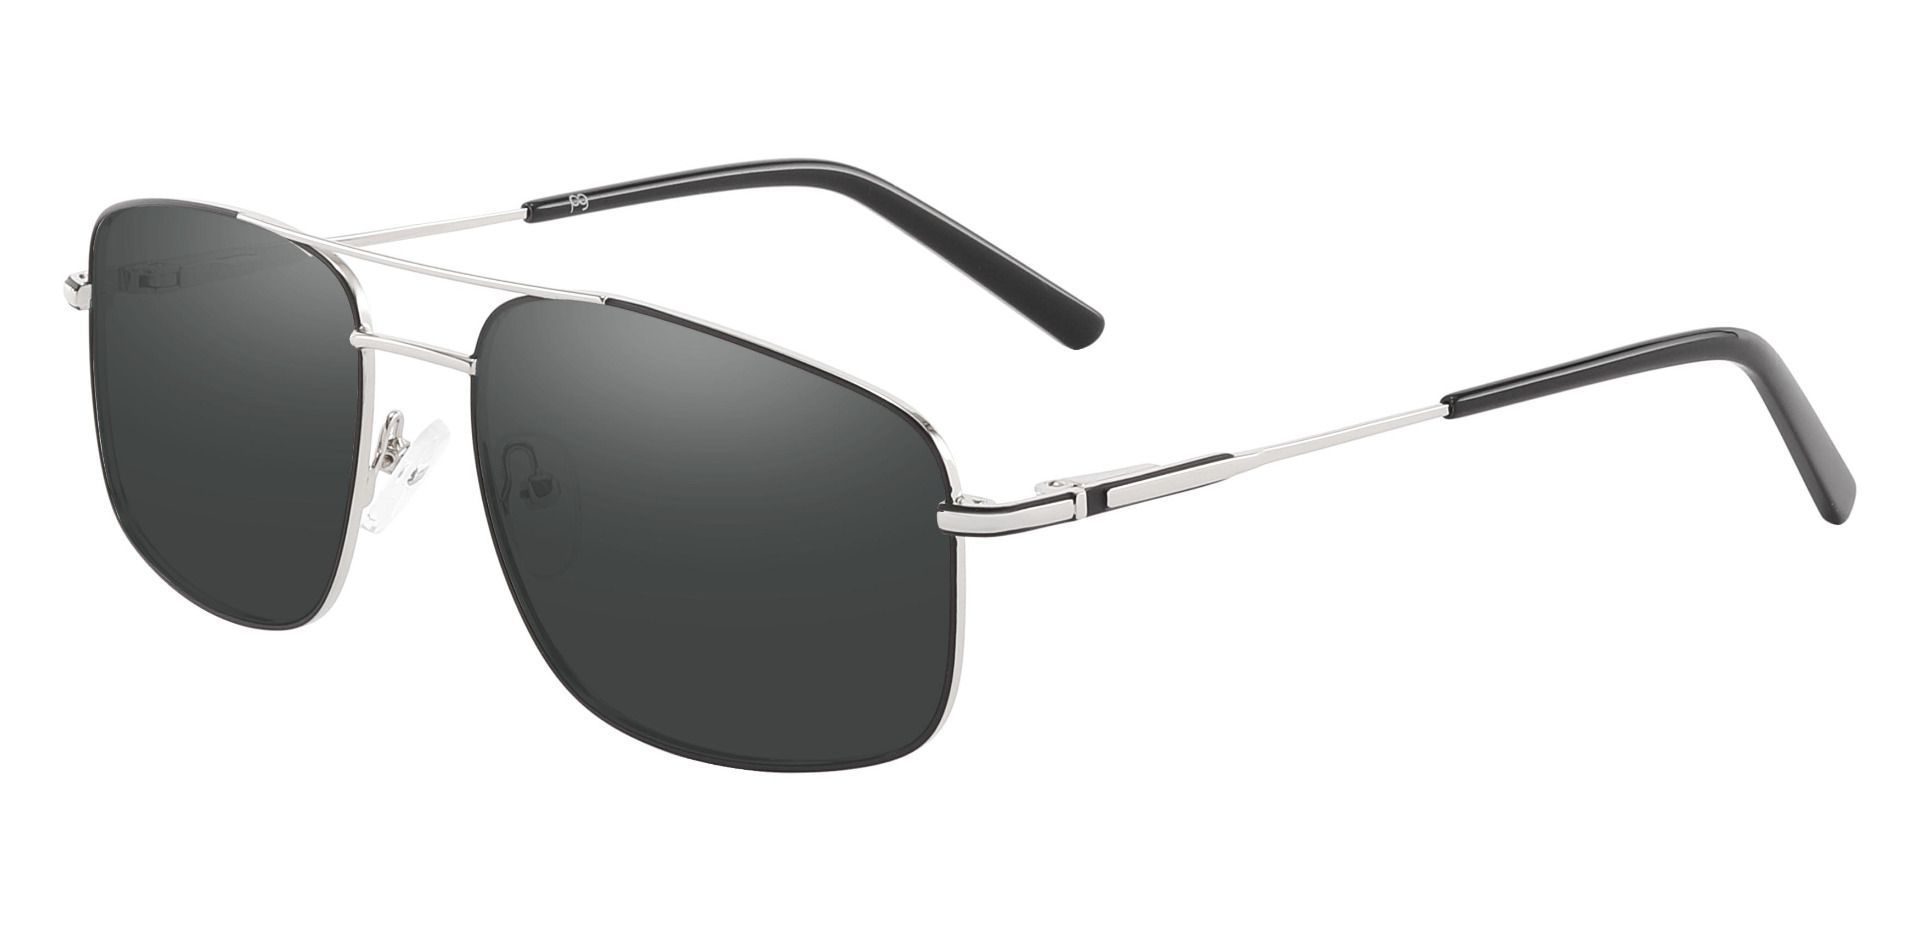 Turner Aviator Prescription Sunglasses - Silver Frame With Gray Lenses